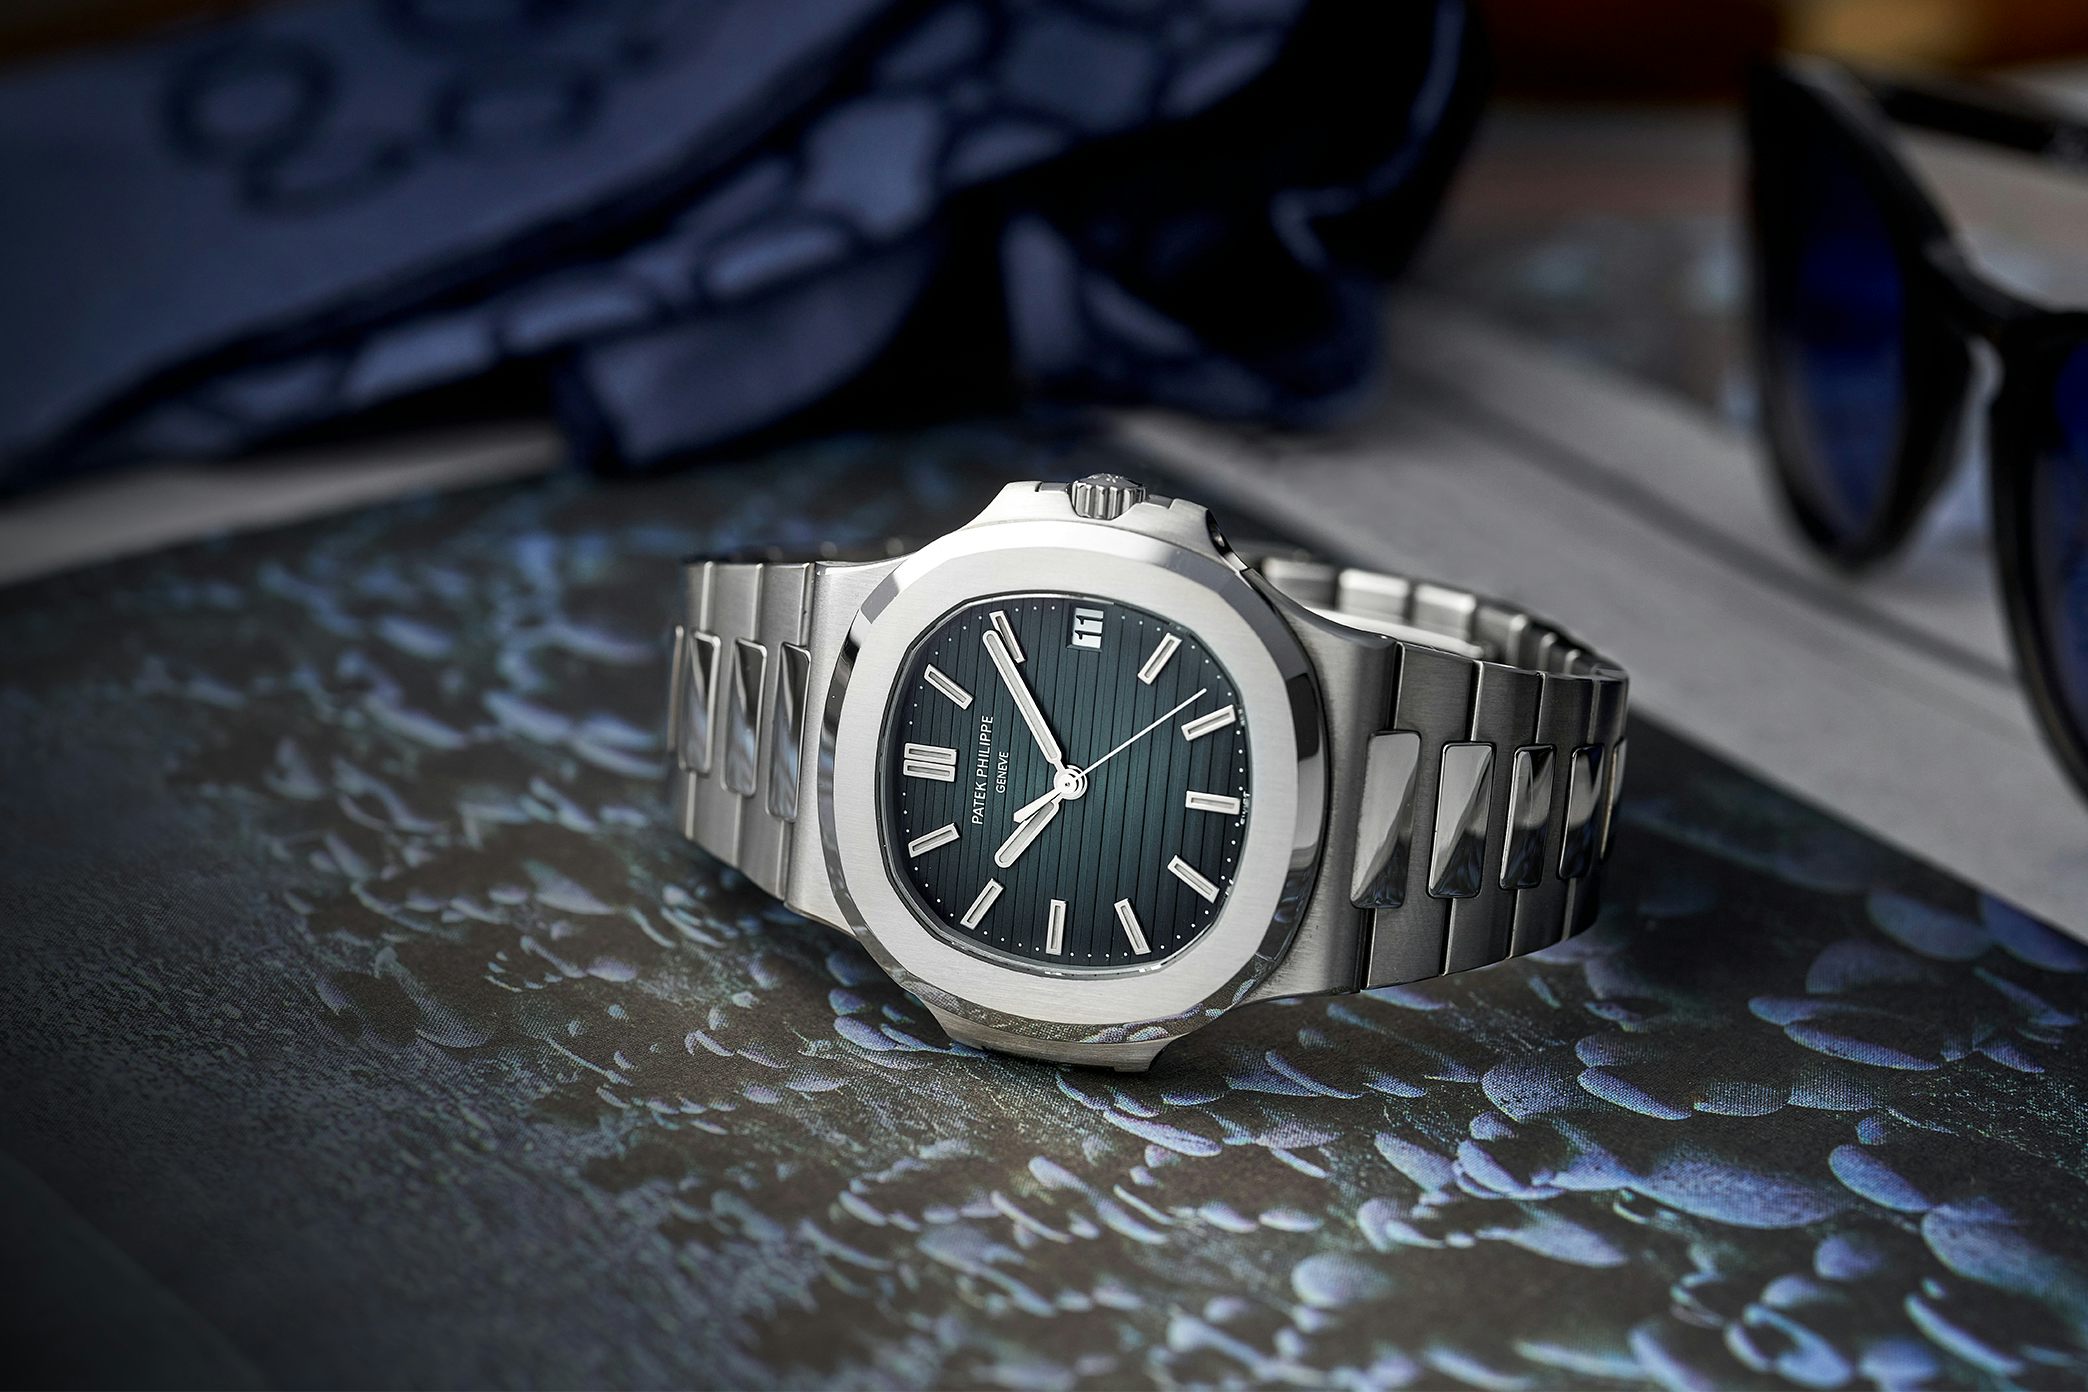 Patek Philippe Nautilus 5711/1A-011 White Dial - Perpetual & Co Watches